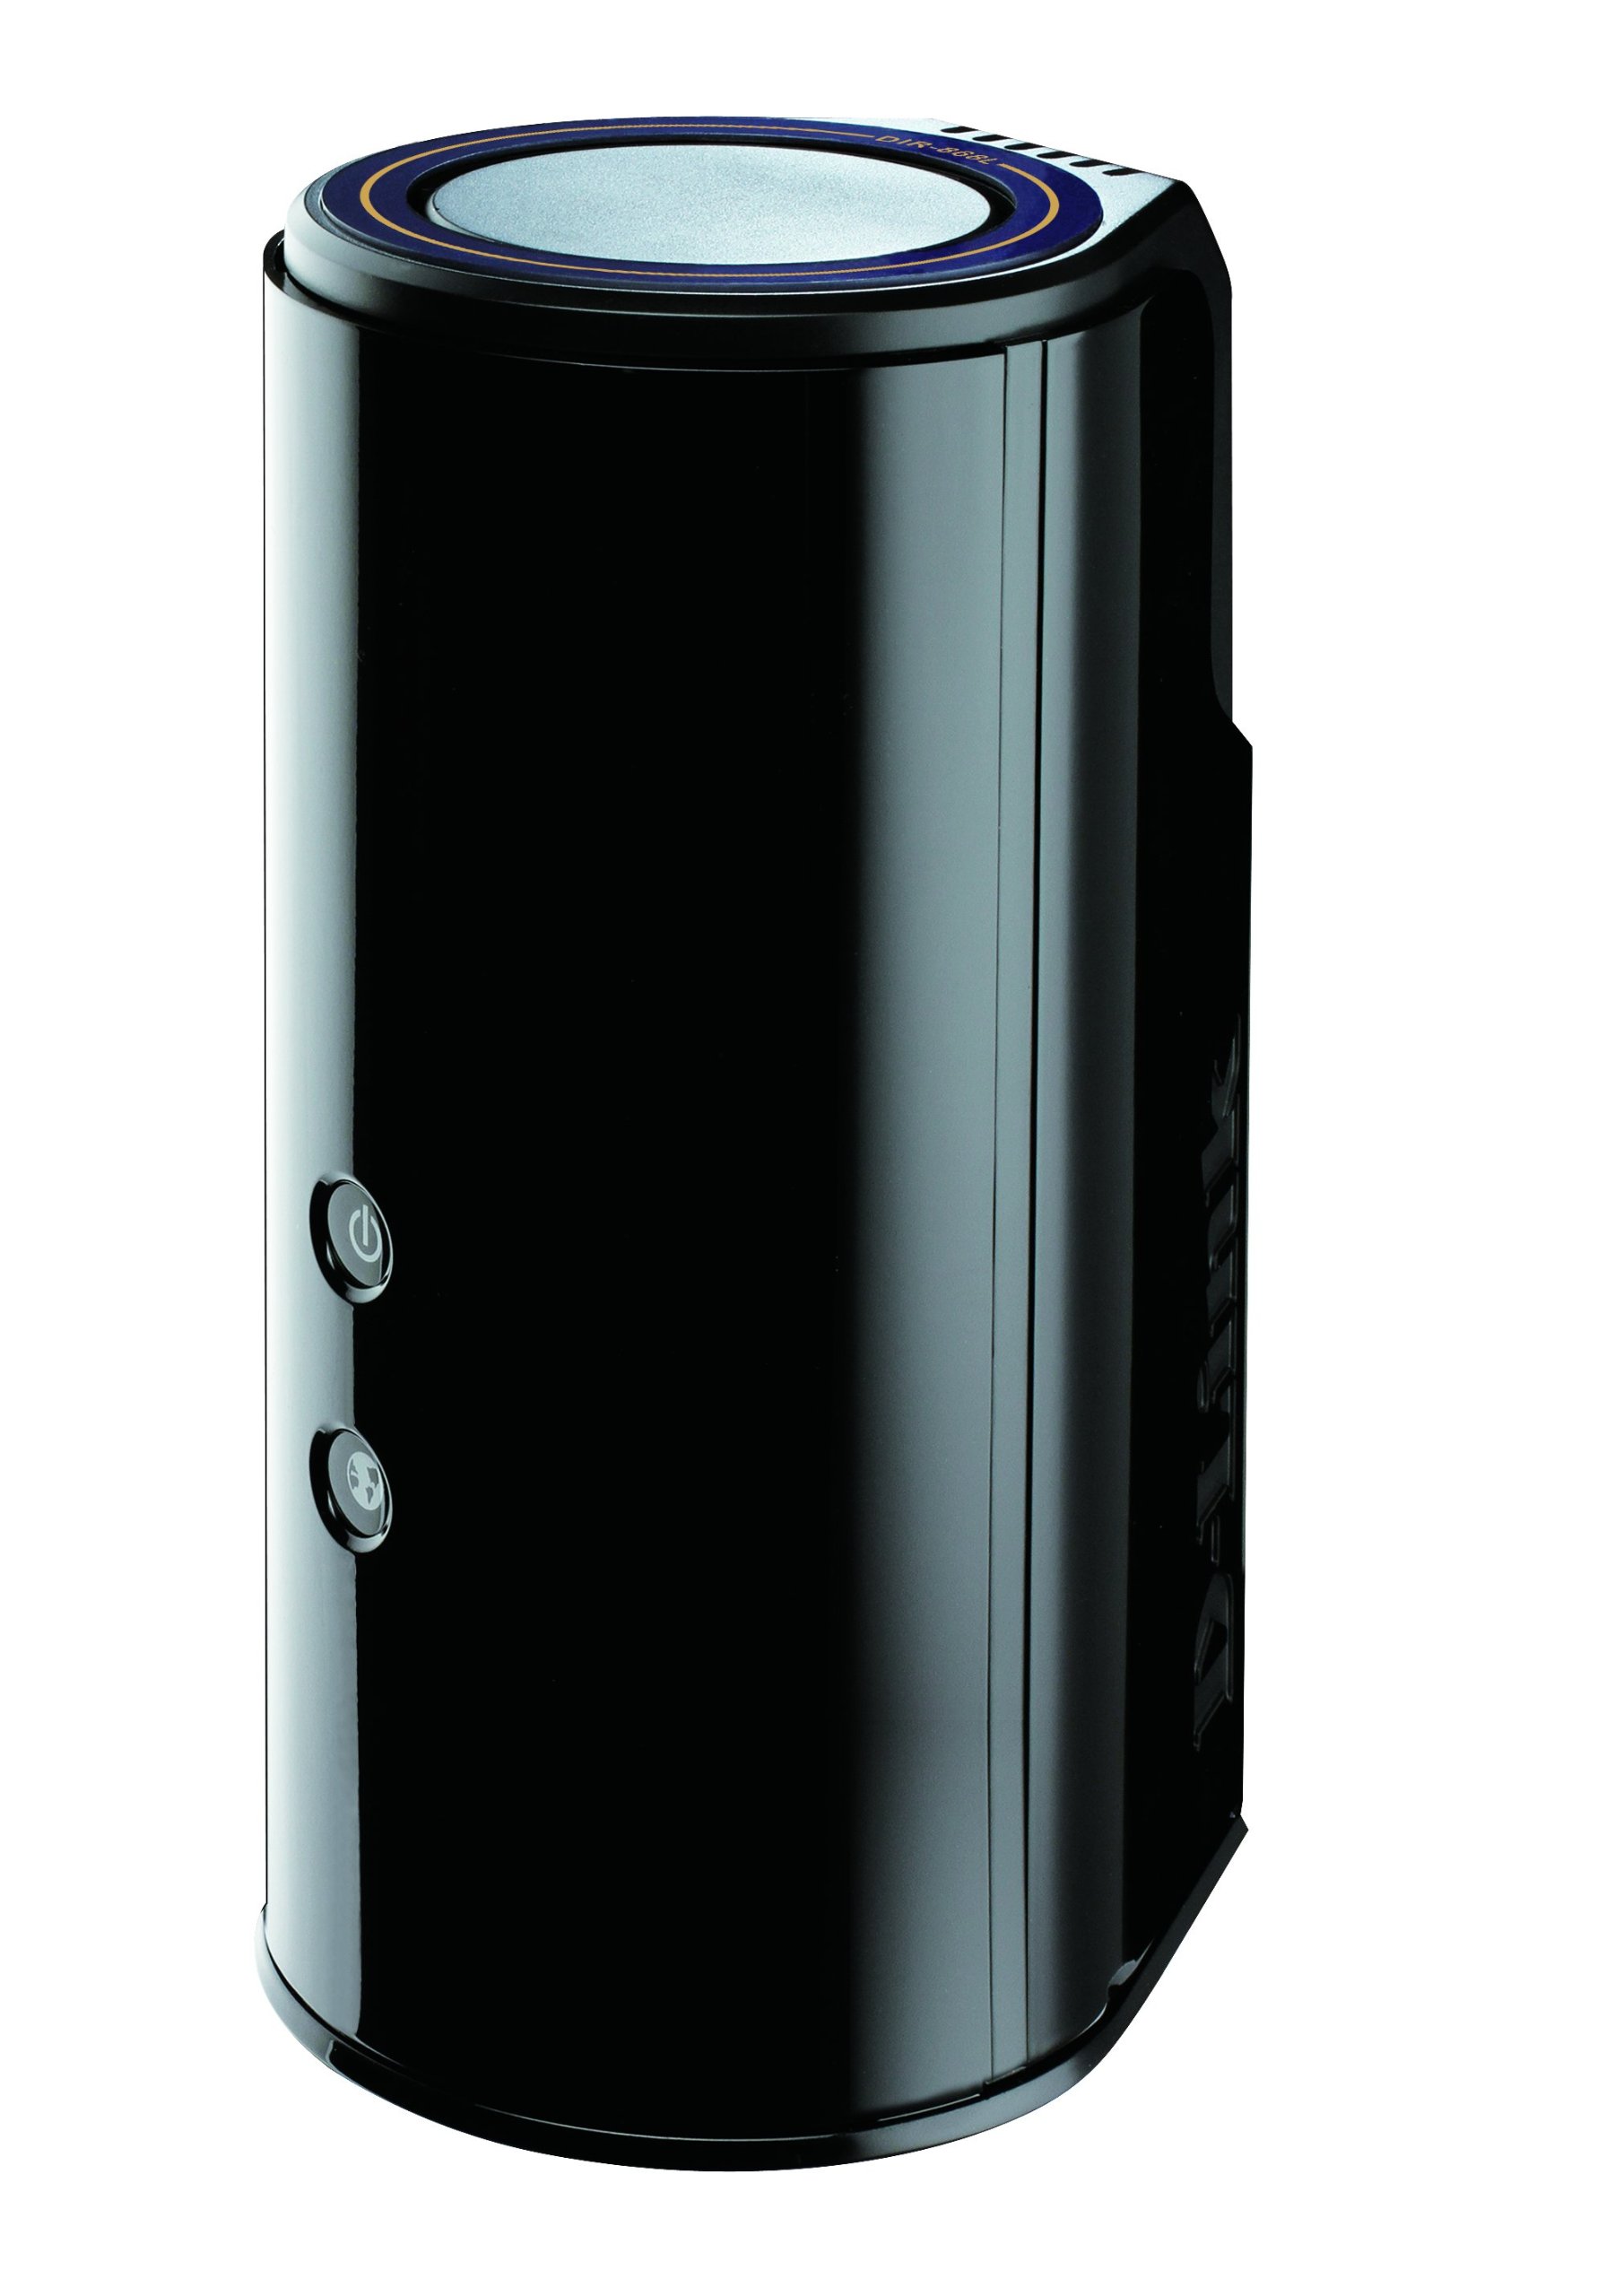 D-Link Wireless AC Smartbeam 1750 Mbps Home Cloud App-Enabled Dual-Band Gigabit Router (DIR-868L)